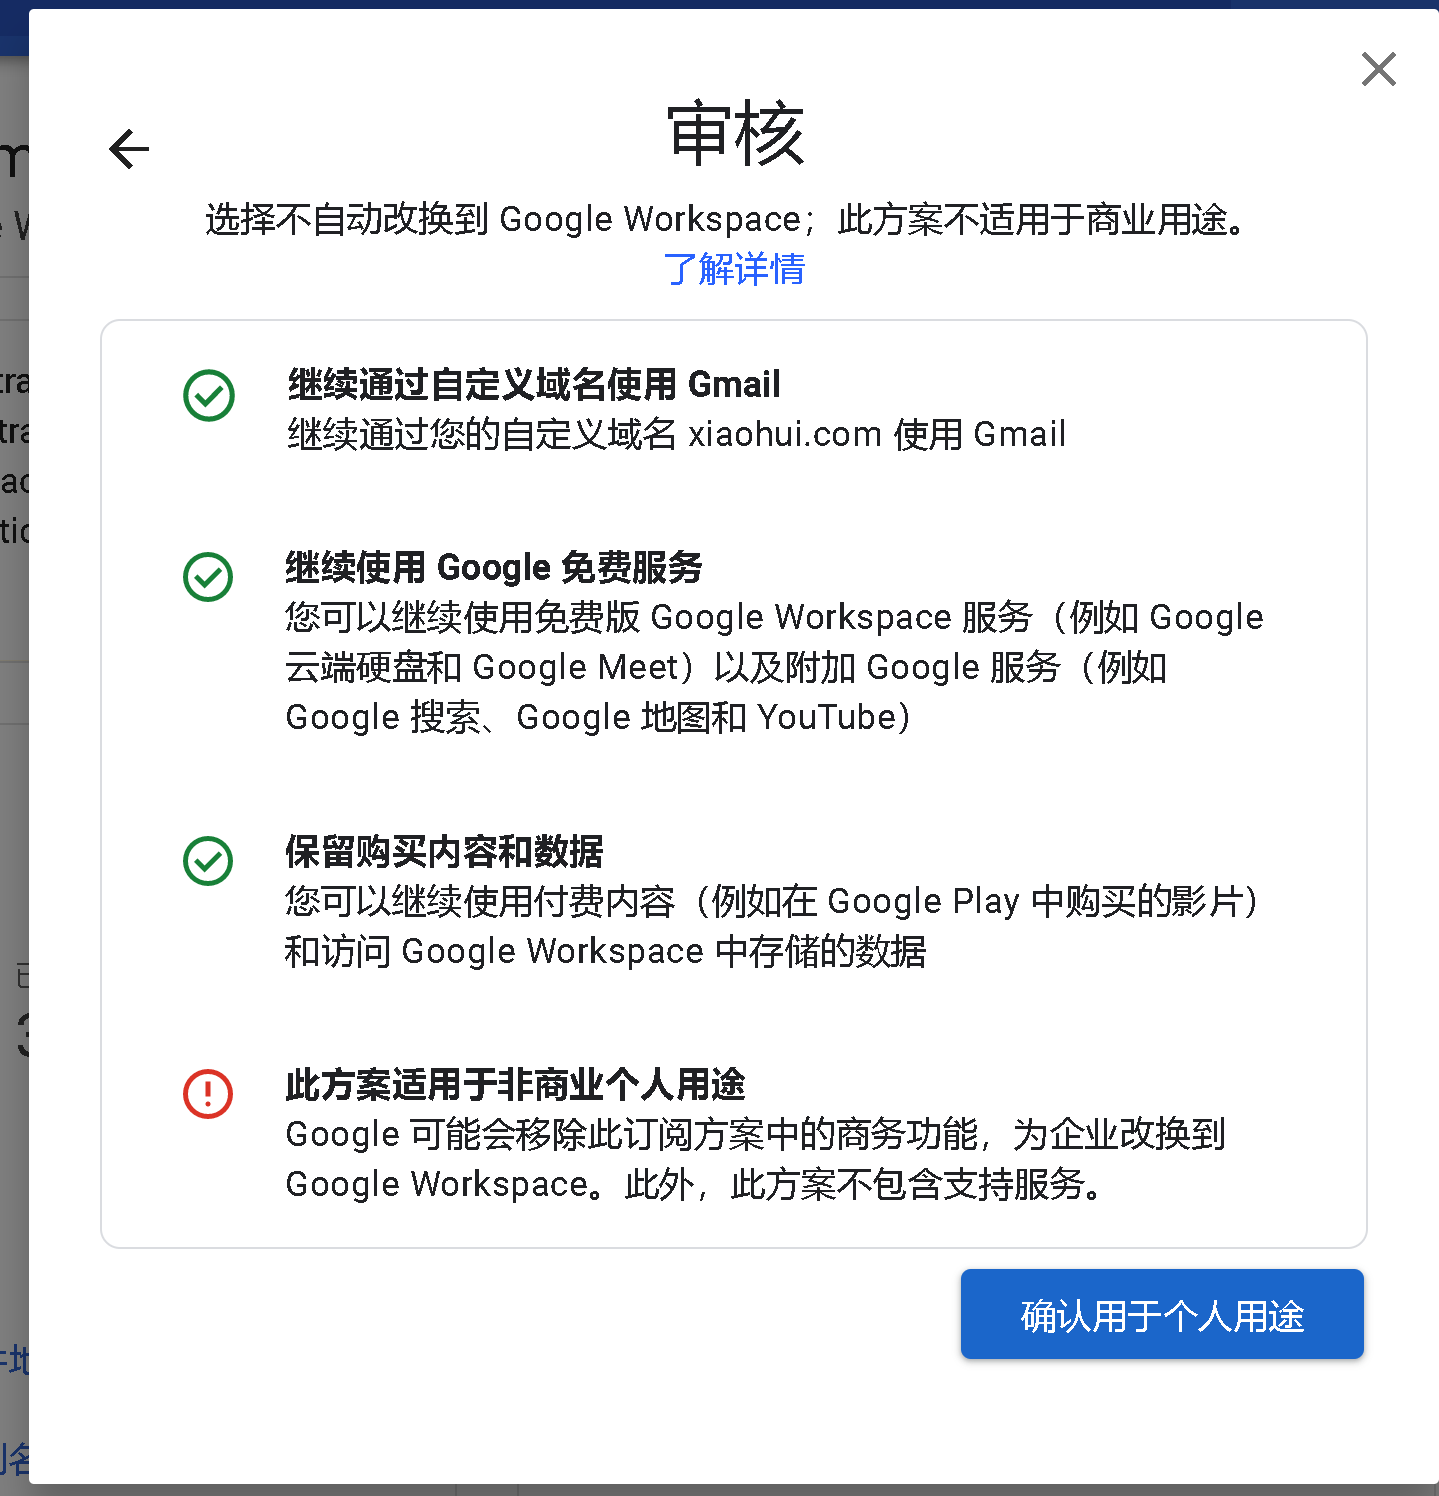 Google Suite 免费域名邮箱可继续用于个人用途- XiaoHui.com